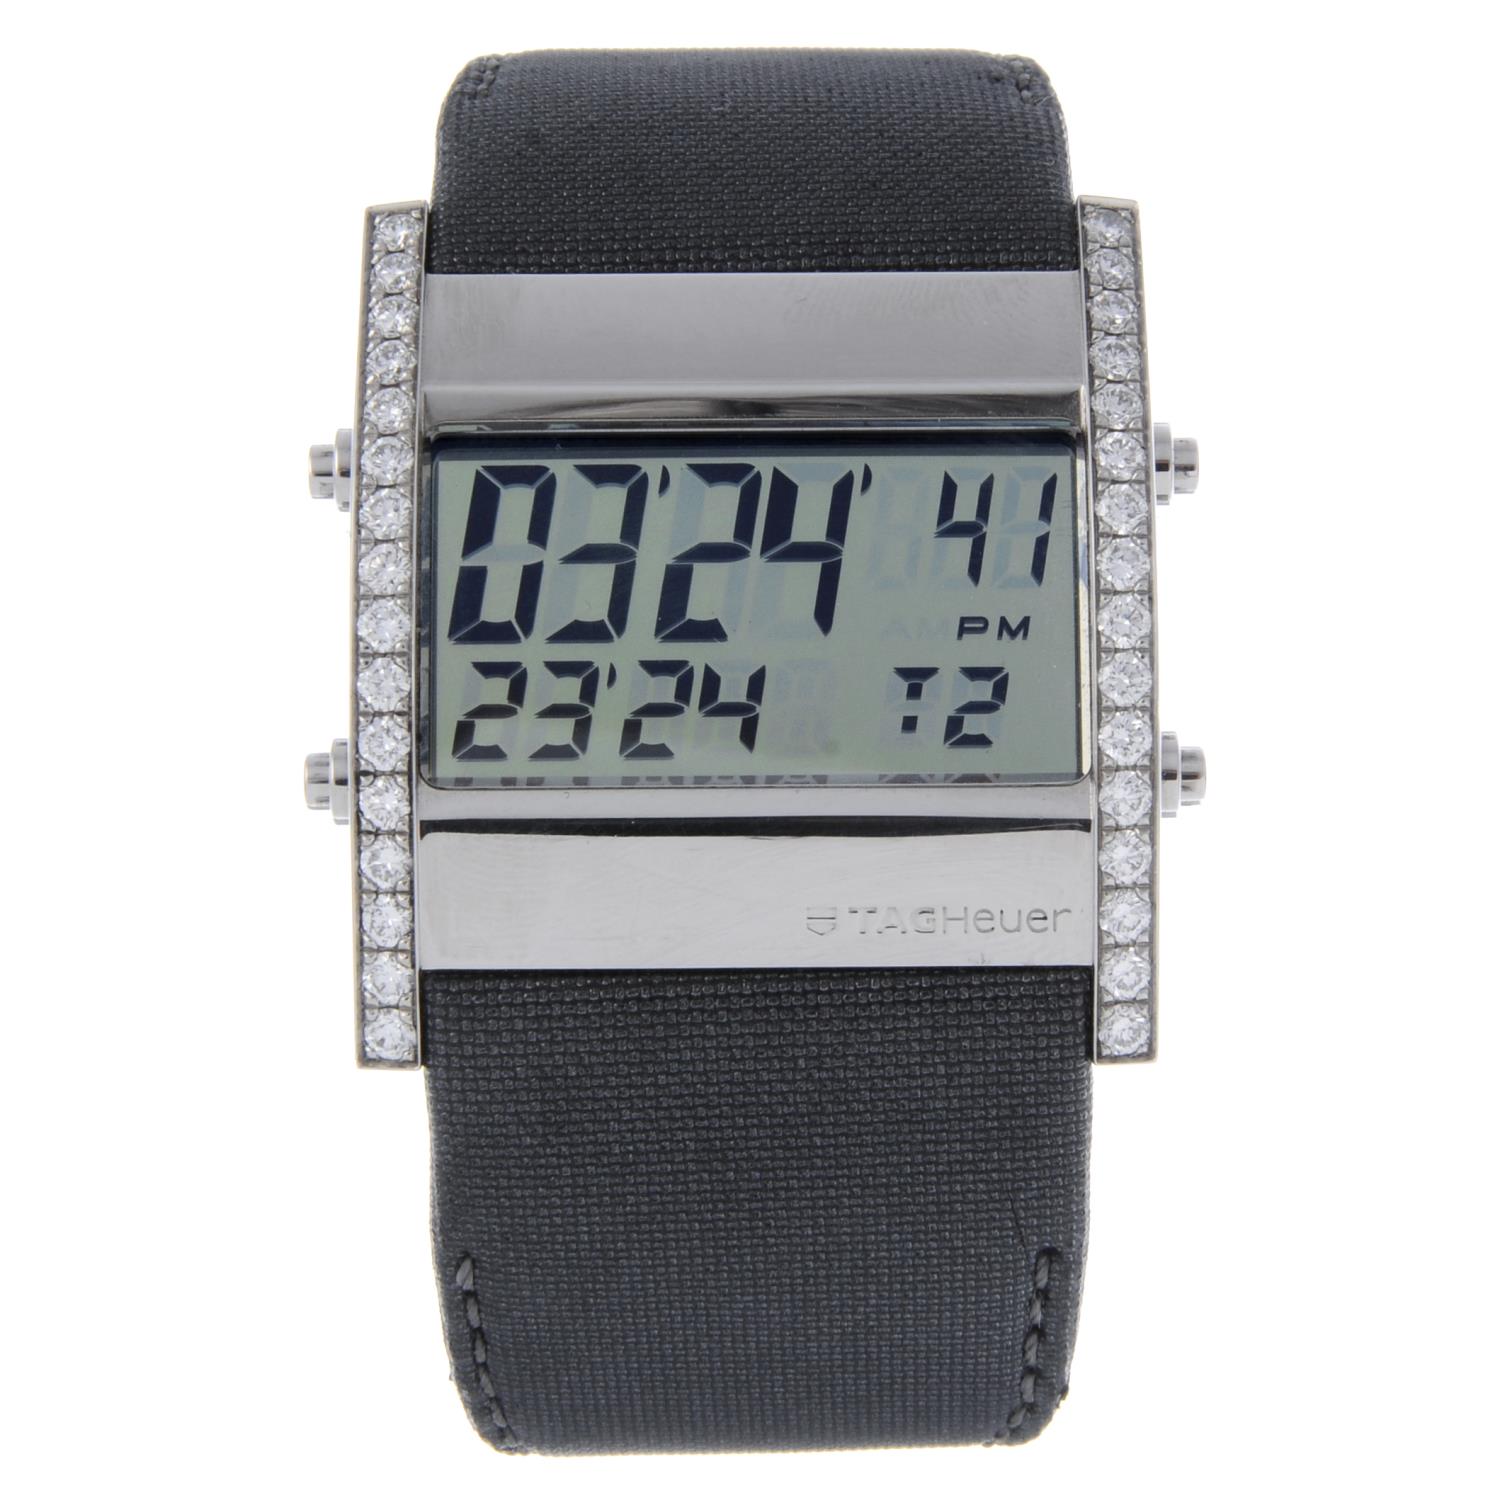 TAG HEUER - a lady's Microtimer wrist watch.